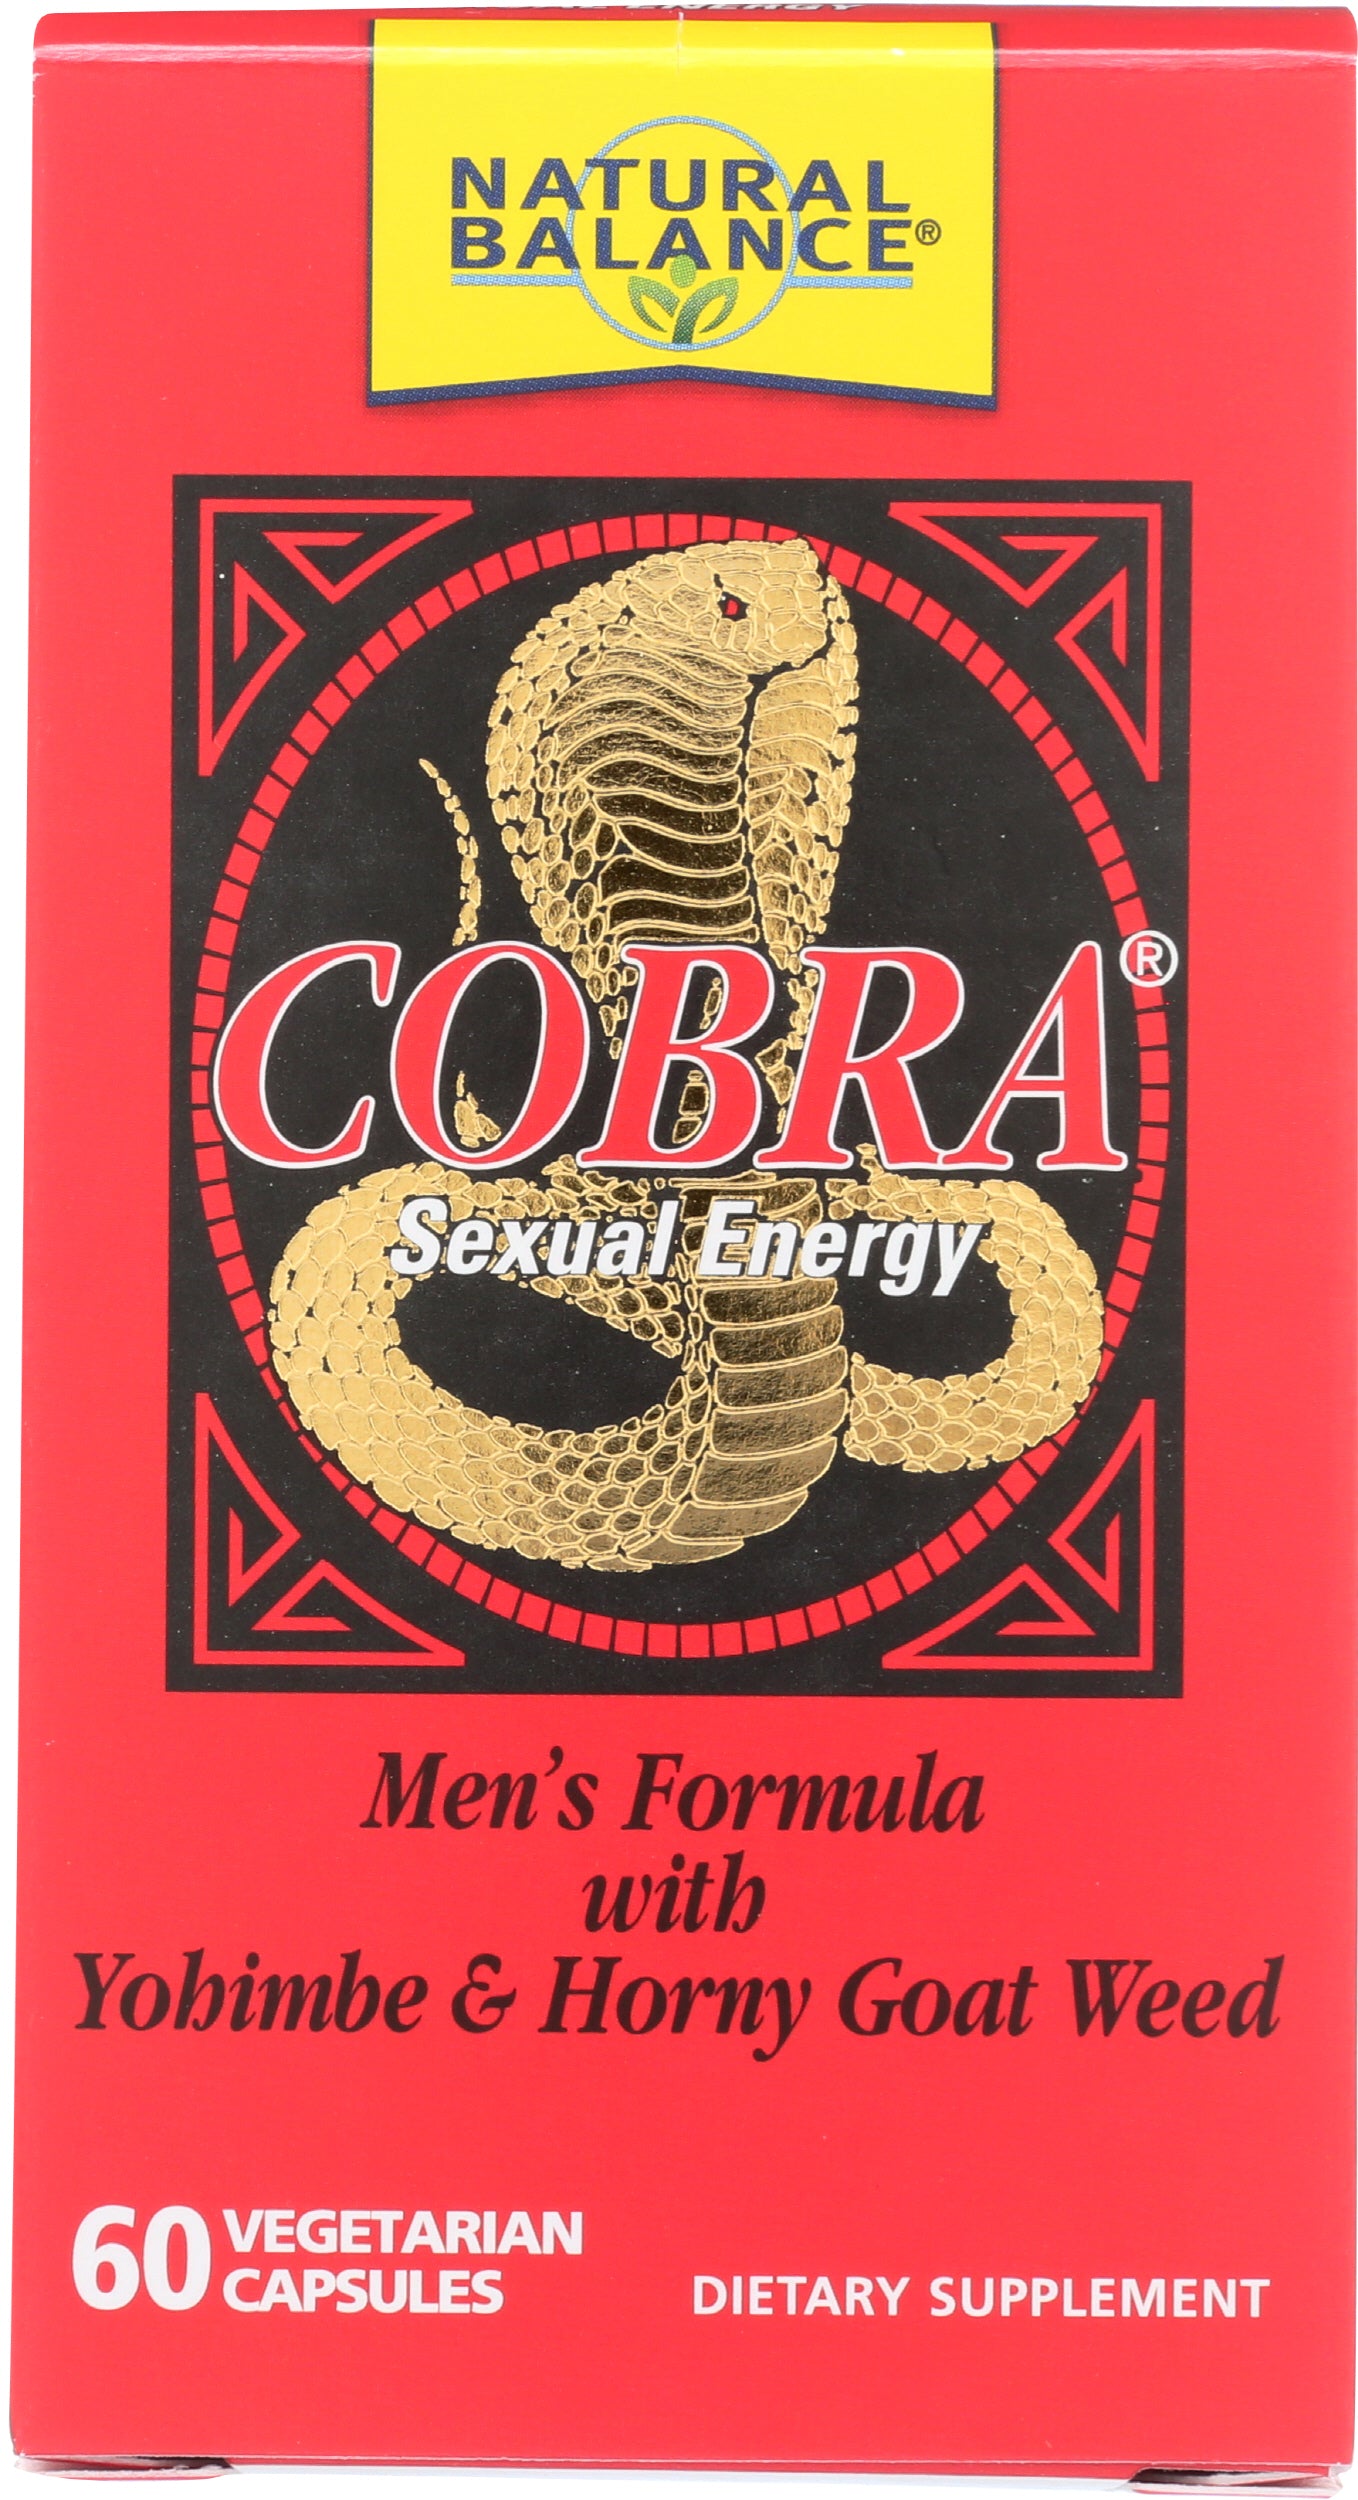 Natural Balance Cobra Sexual Energy Yohimbe & Horny Goat Weed 60 VegCaps